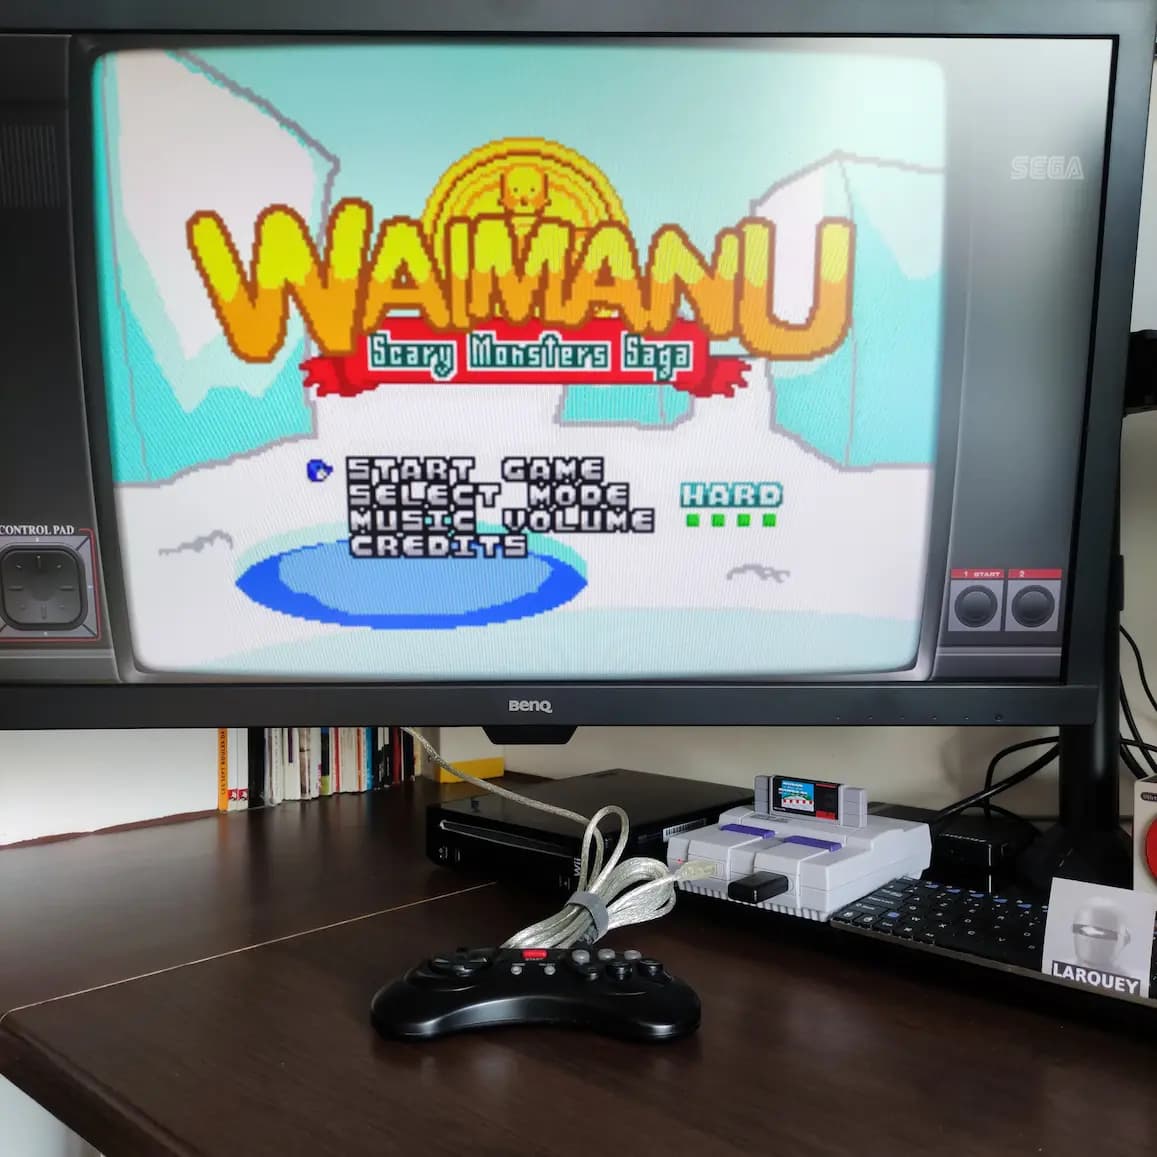 Larquey: Waimanu Scary Monsters Saga [Hard] (Sega Master System Emulated) 96,802 points on 2022-07-04 04:55:21